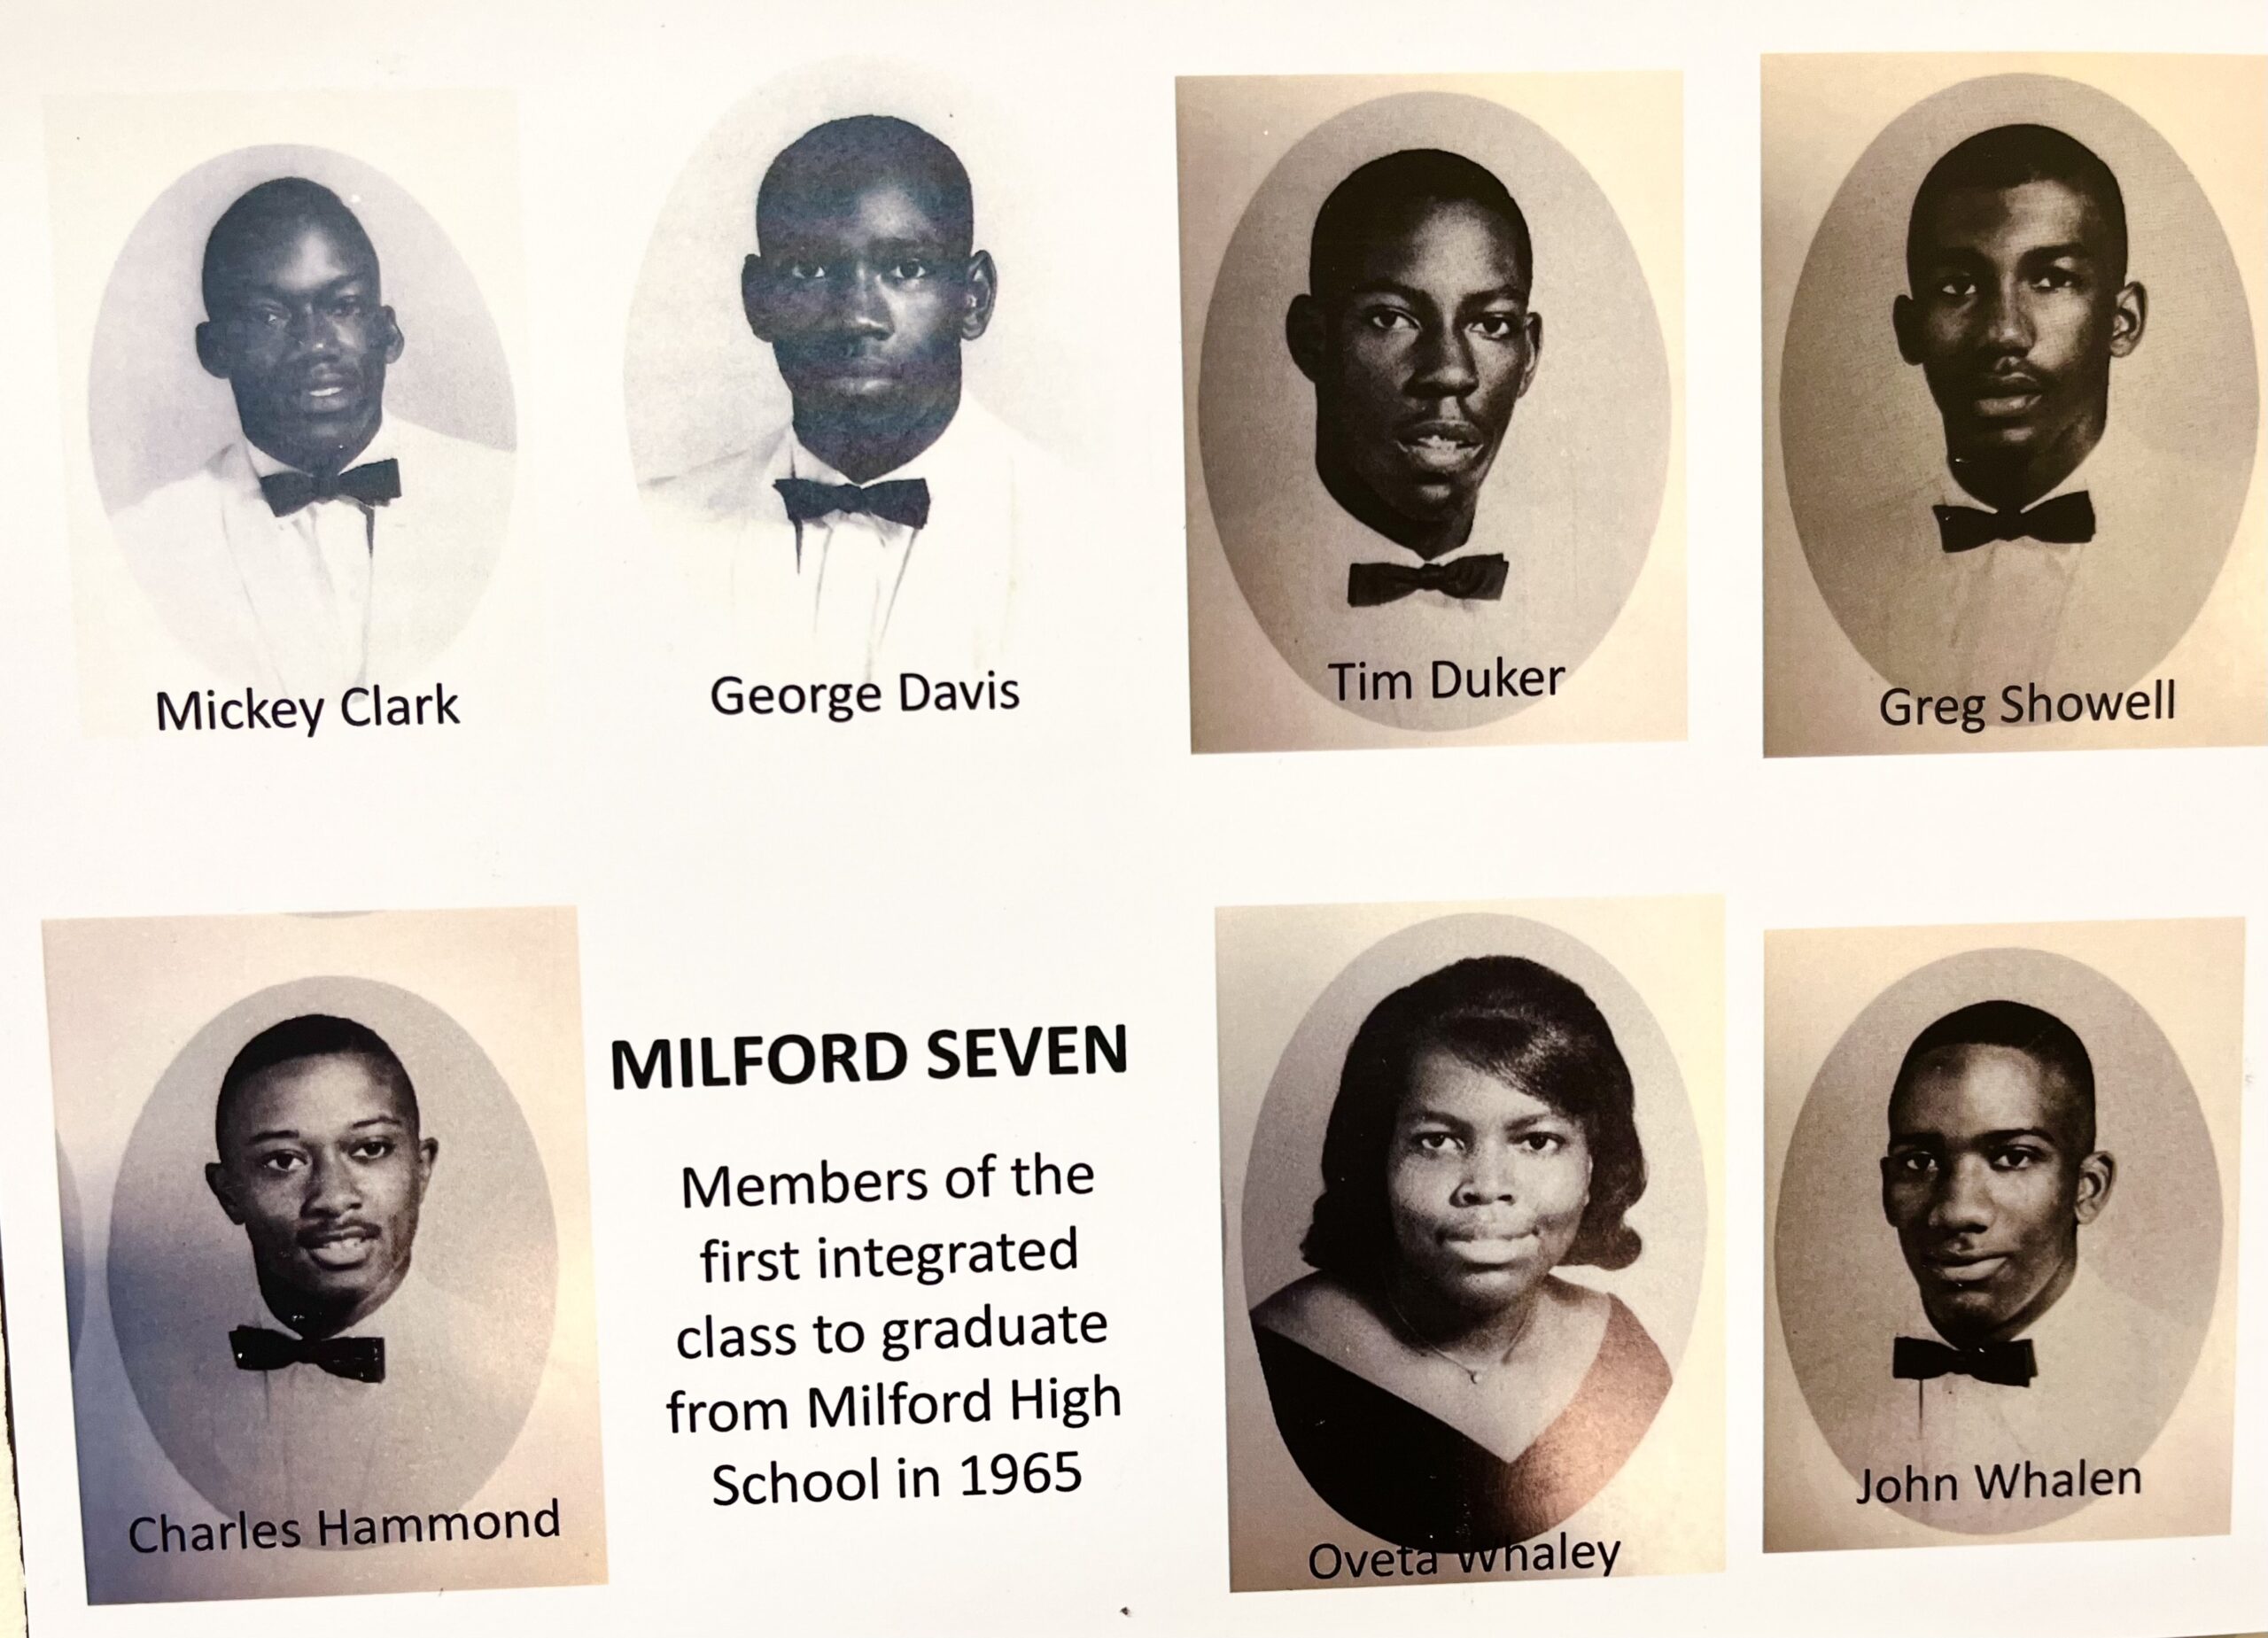 Black History Exhibit 1 (Milford Seven)